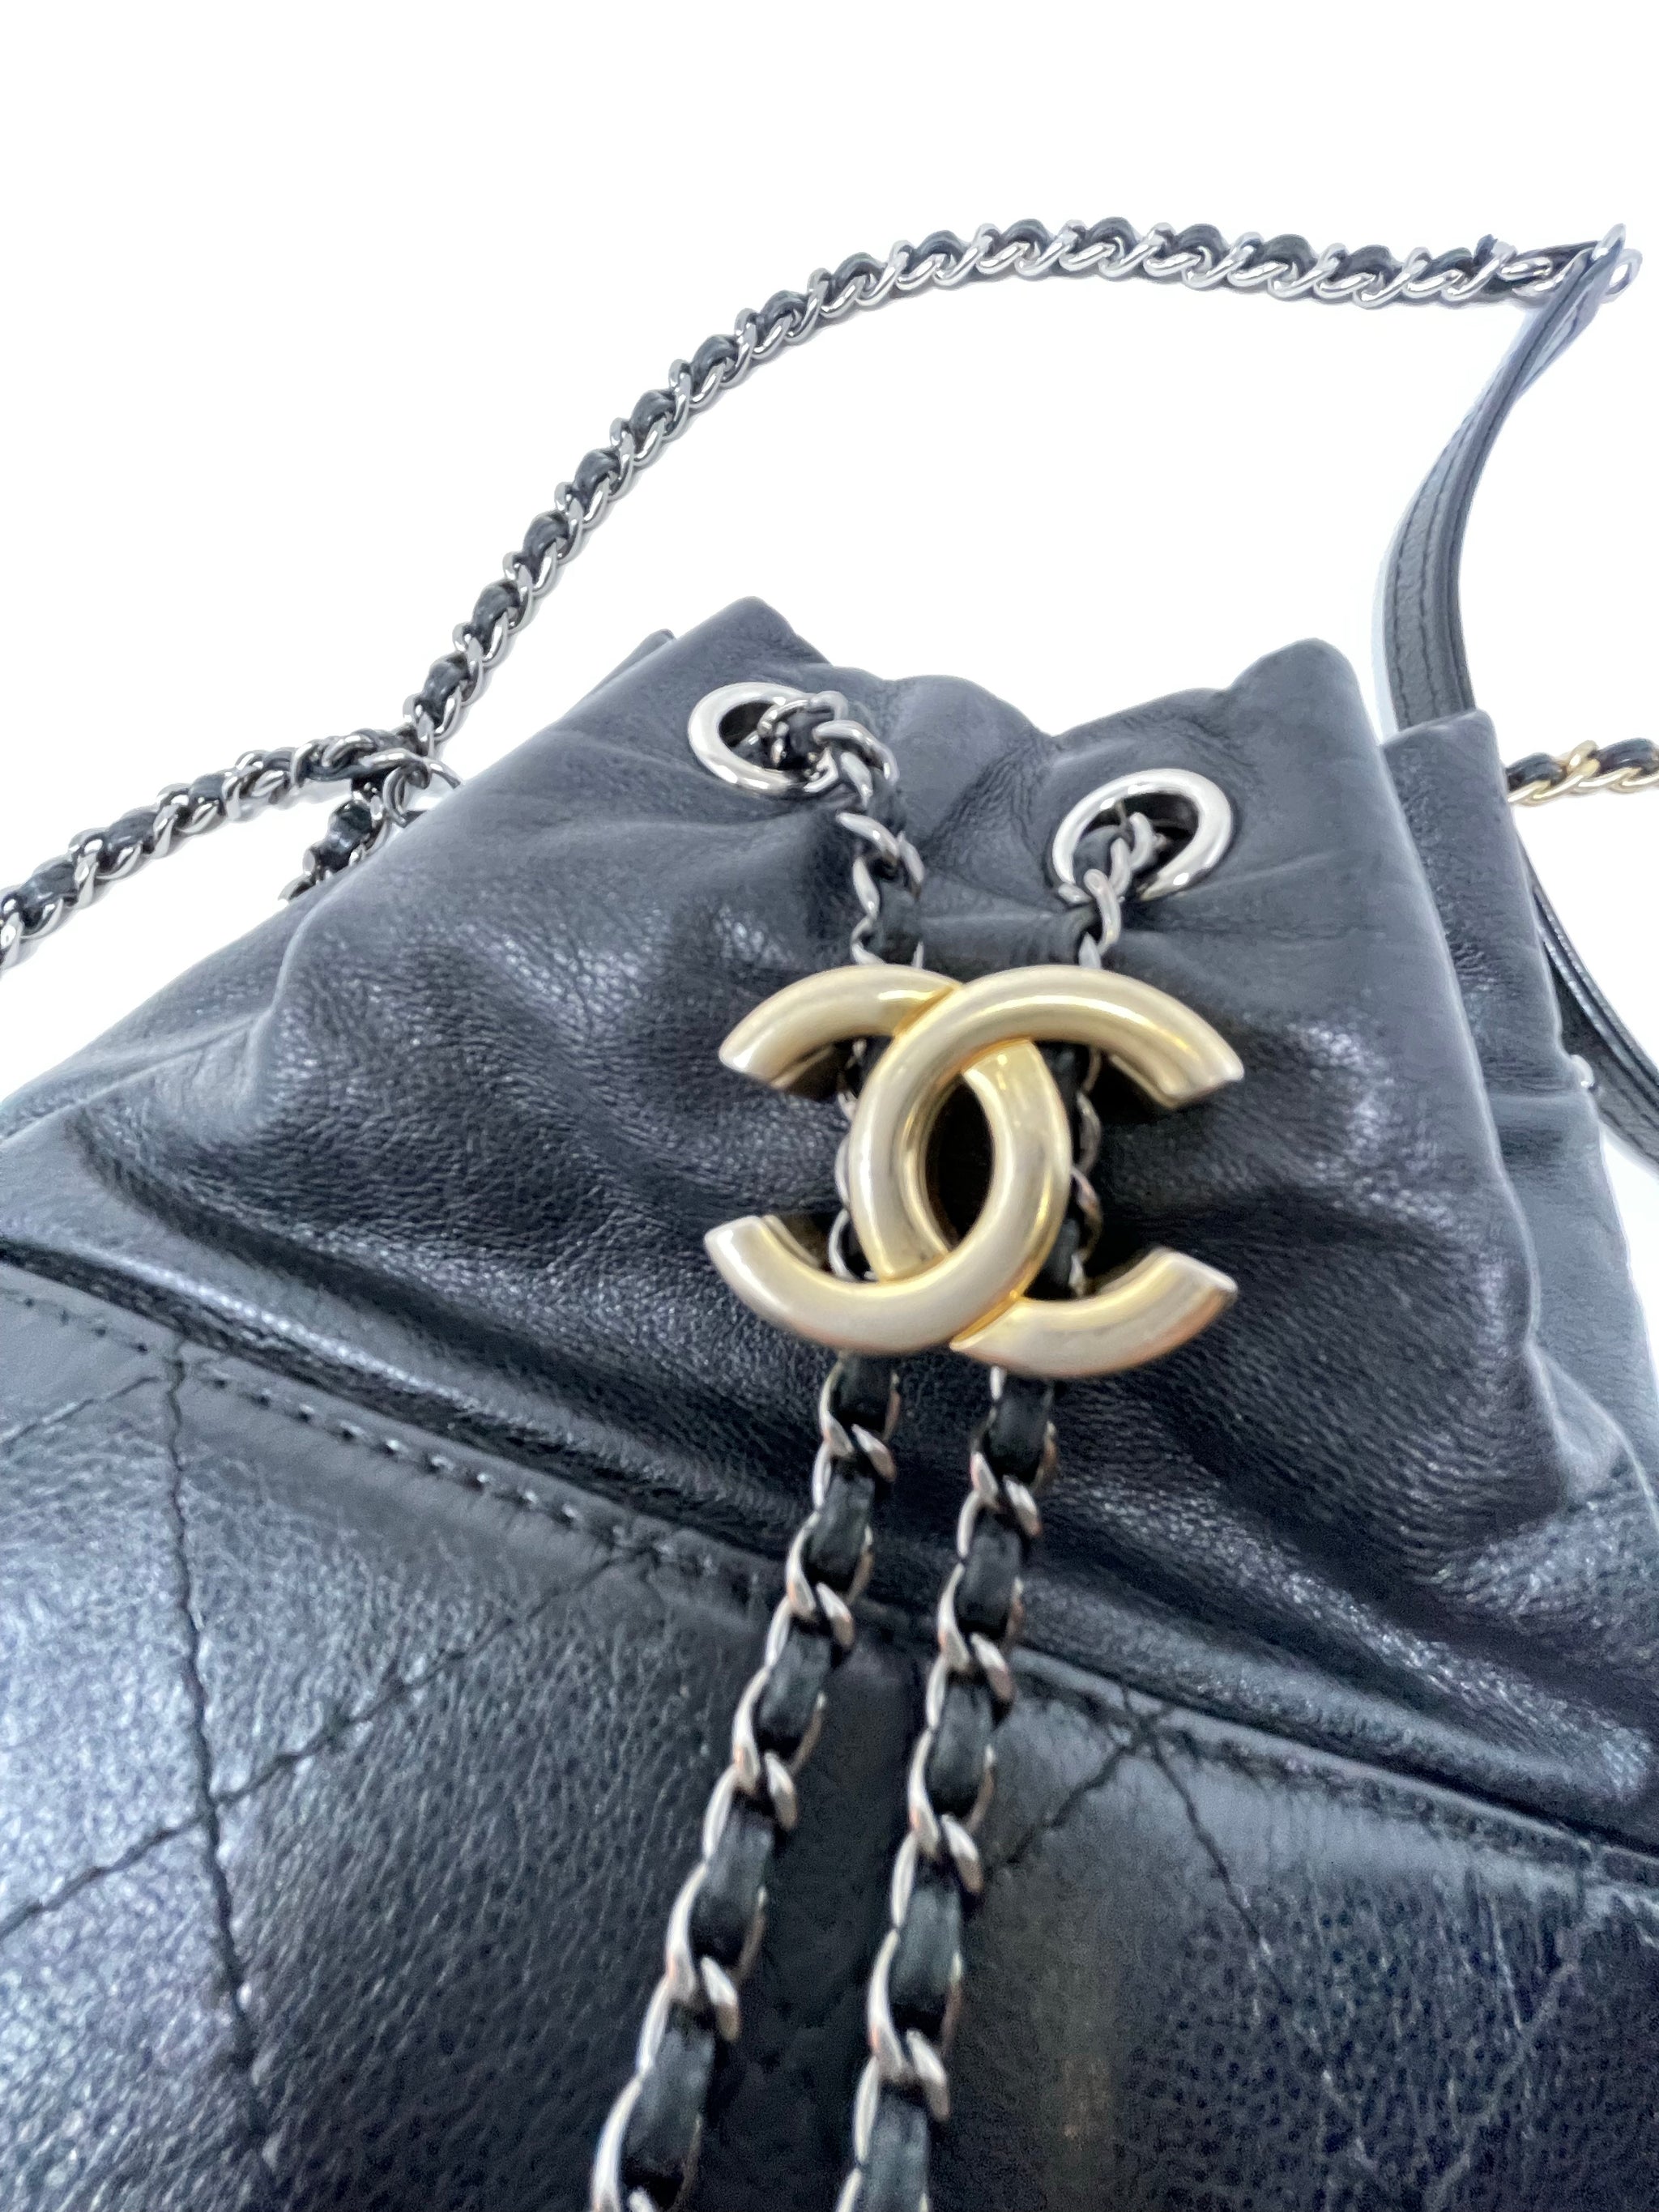 Chanel vs Louis Vuitton OPEN bucket drawstring bag comparison